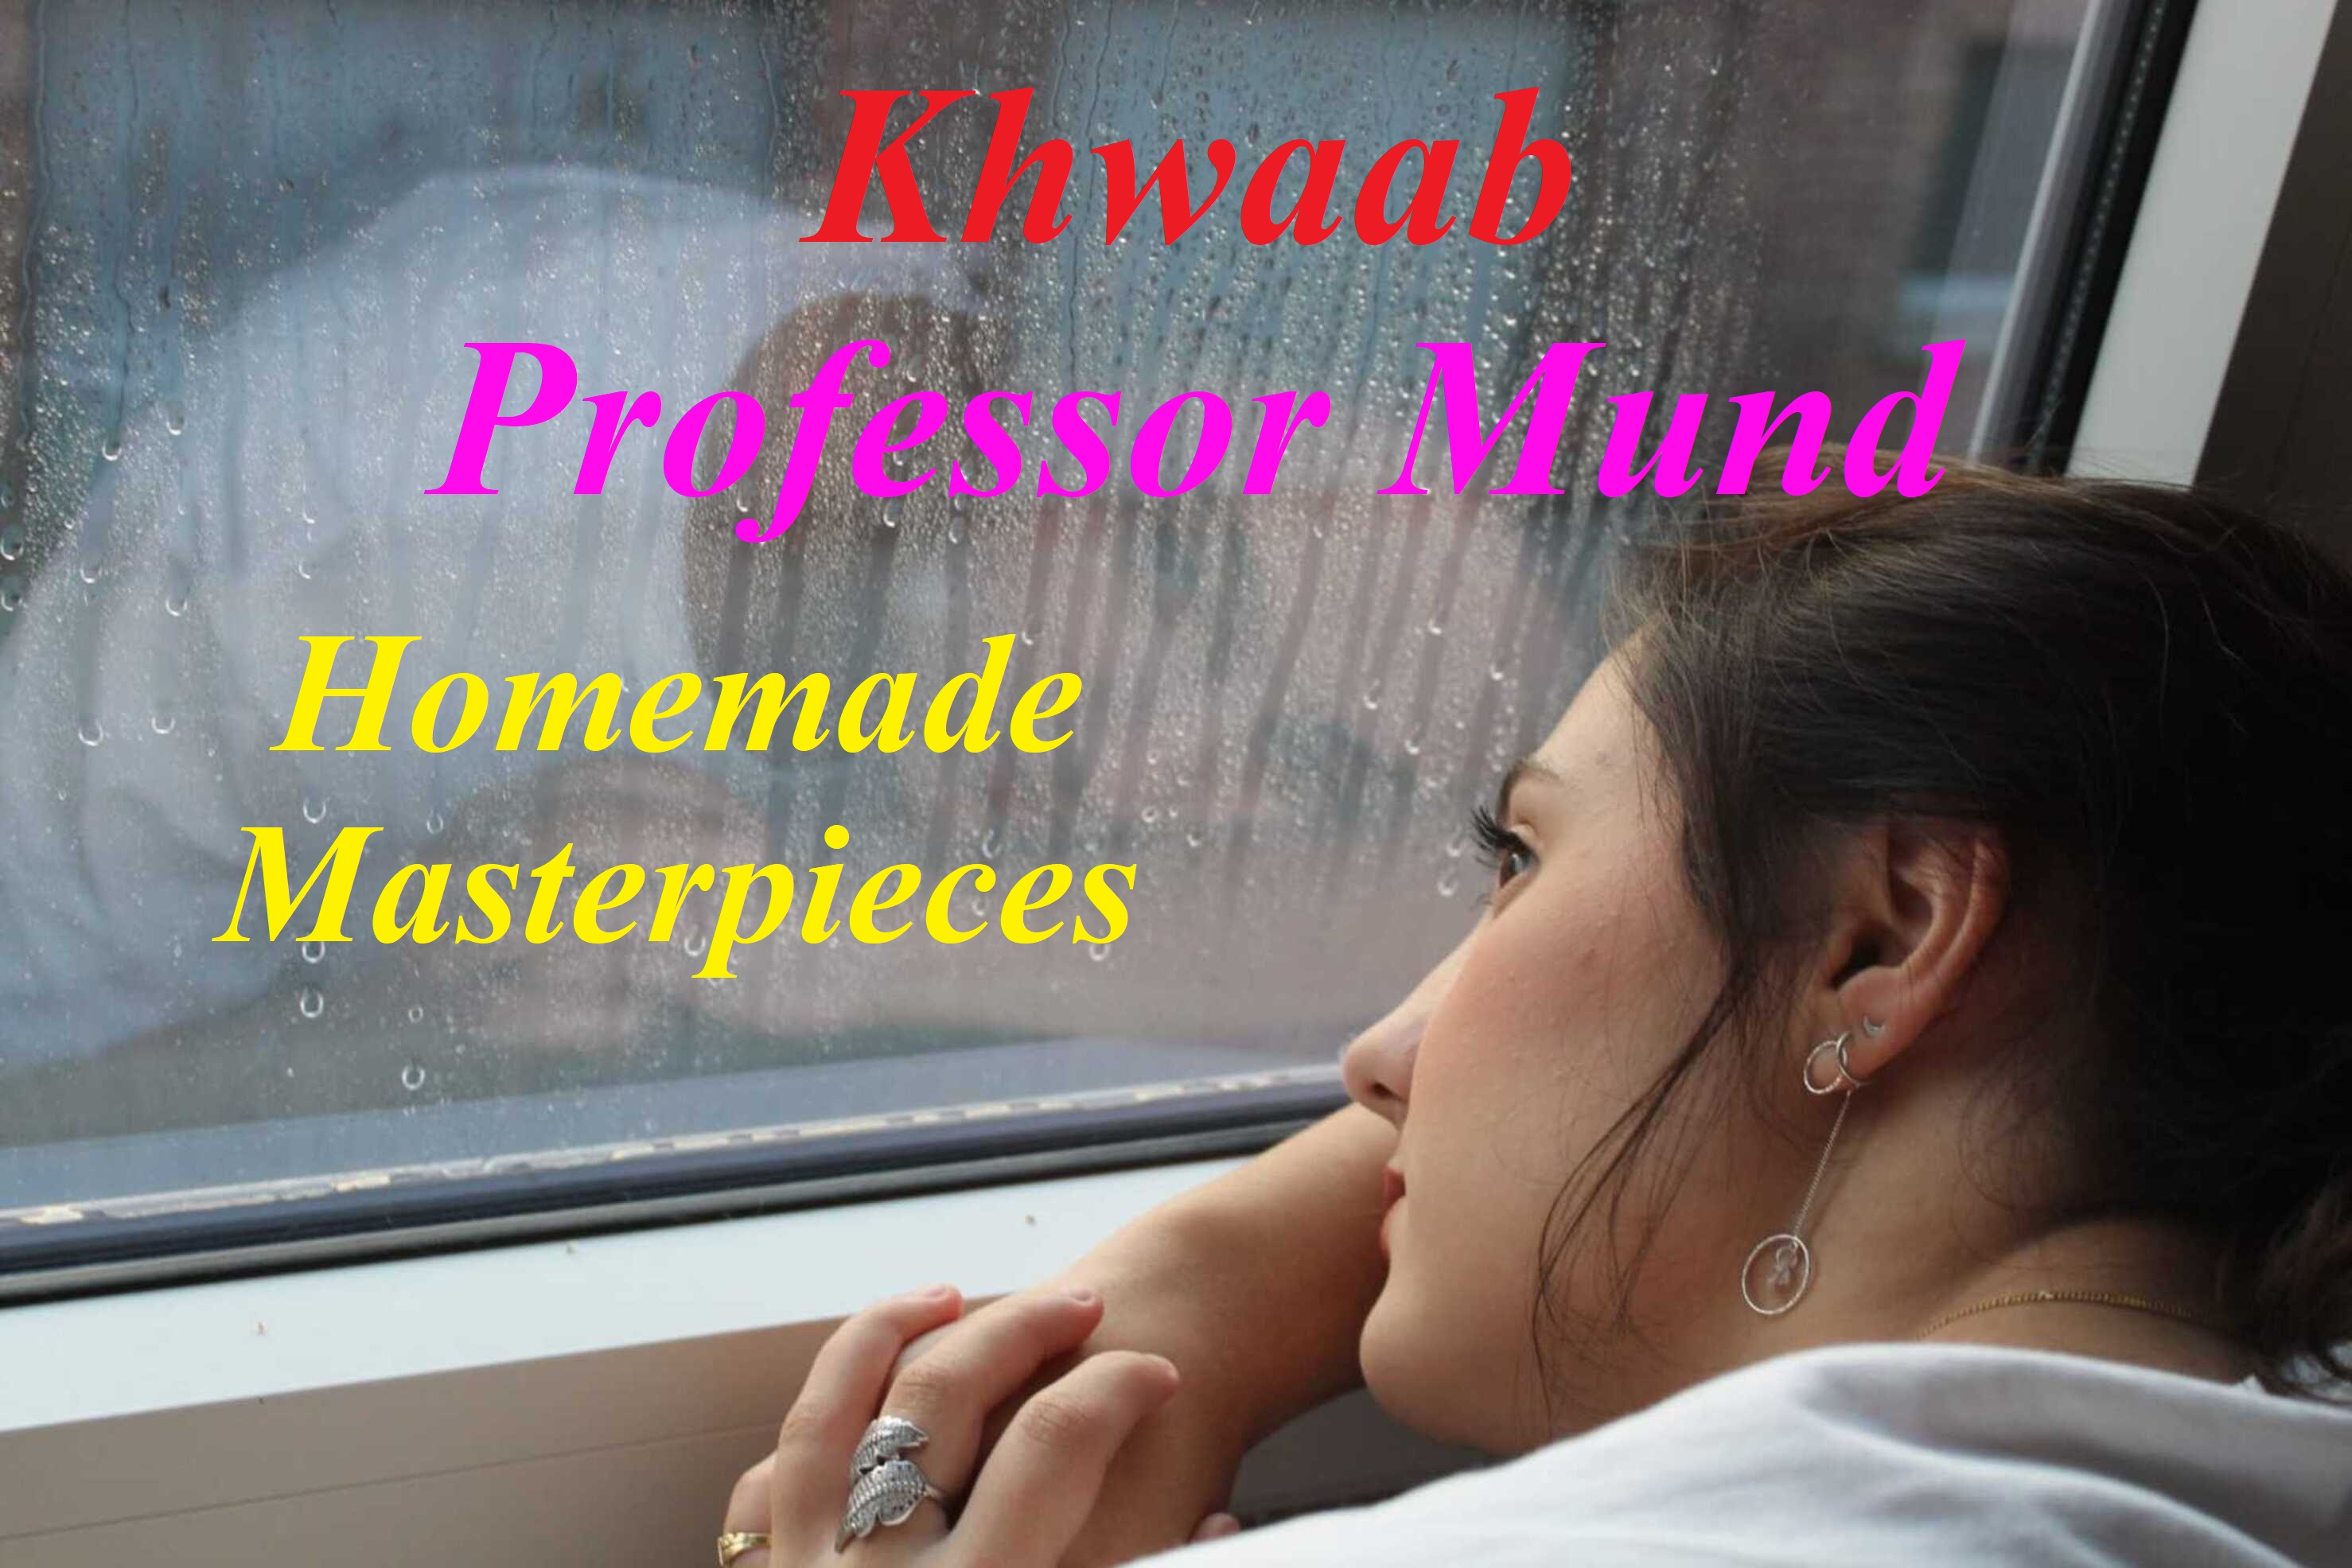 Khwaab Professor Mund